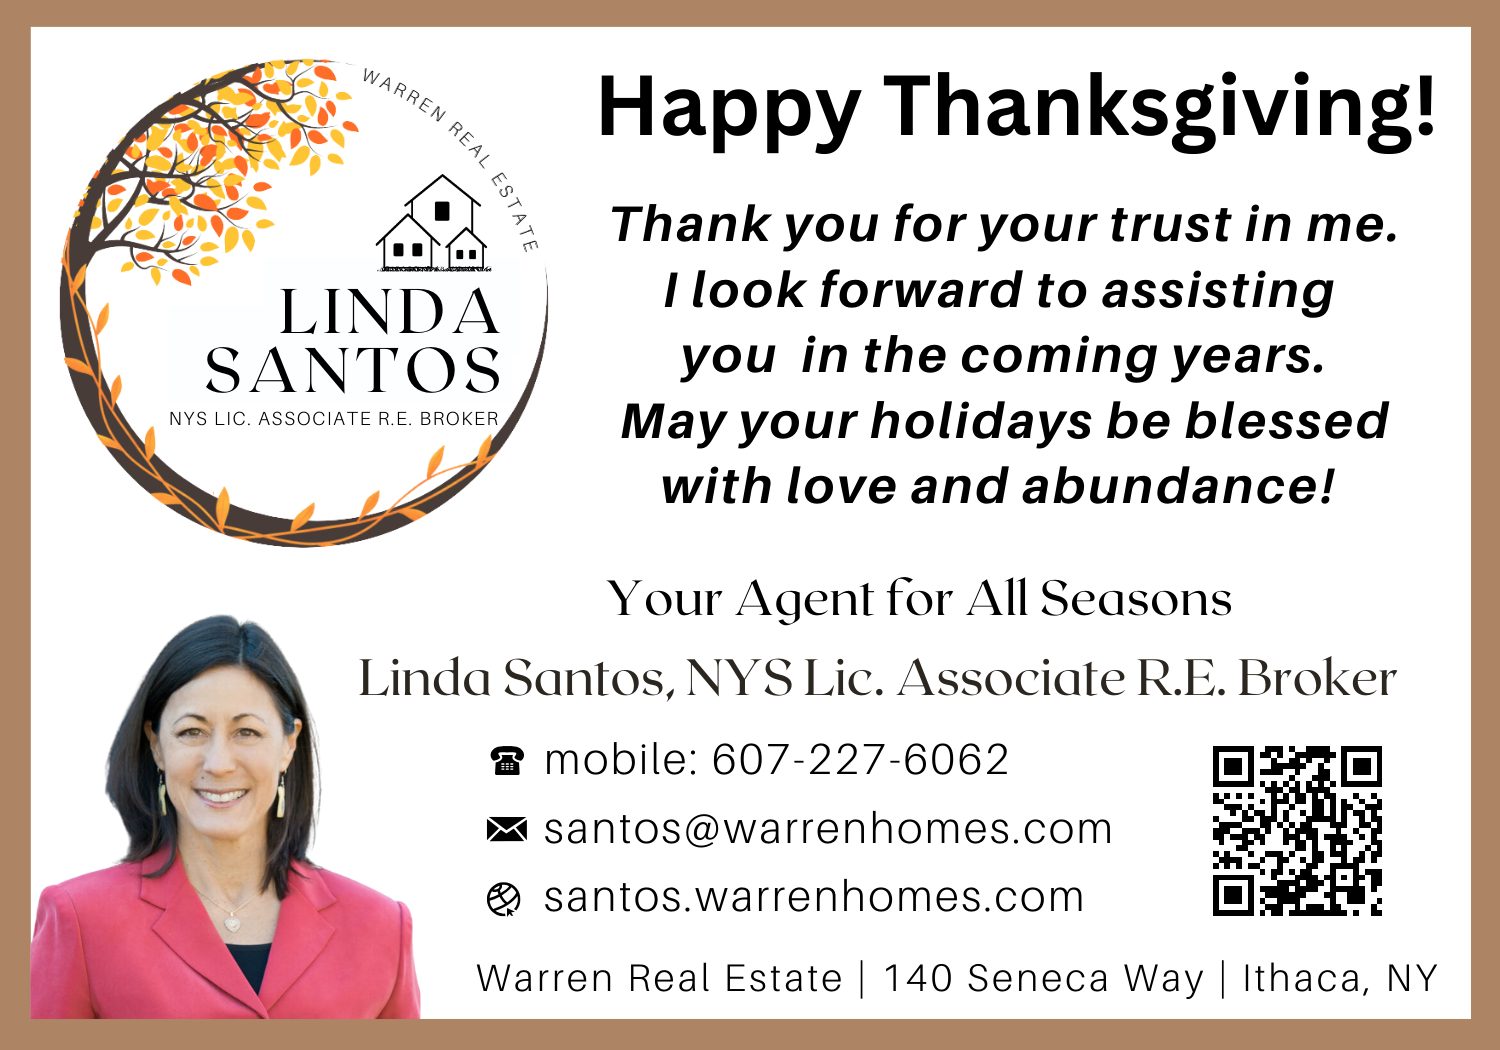 Thanksgiving Greeting from Linda Santos - NYS Lic. Associate Broker at Warren Real Estate